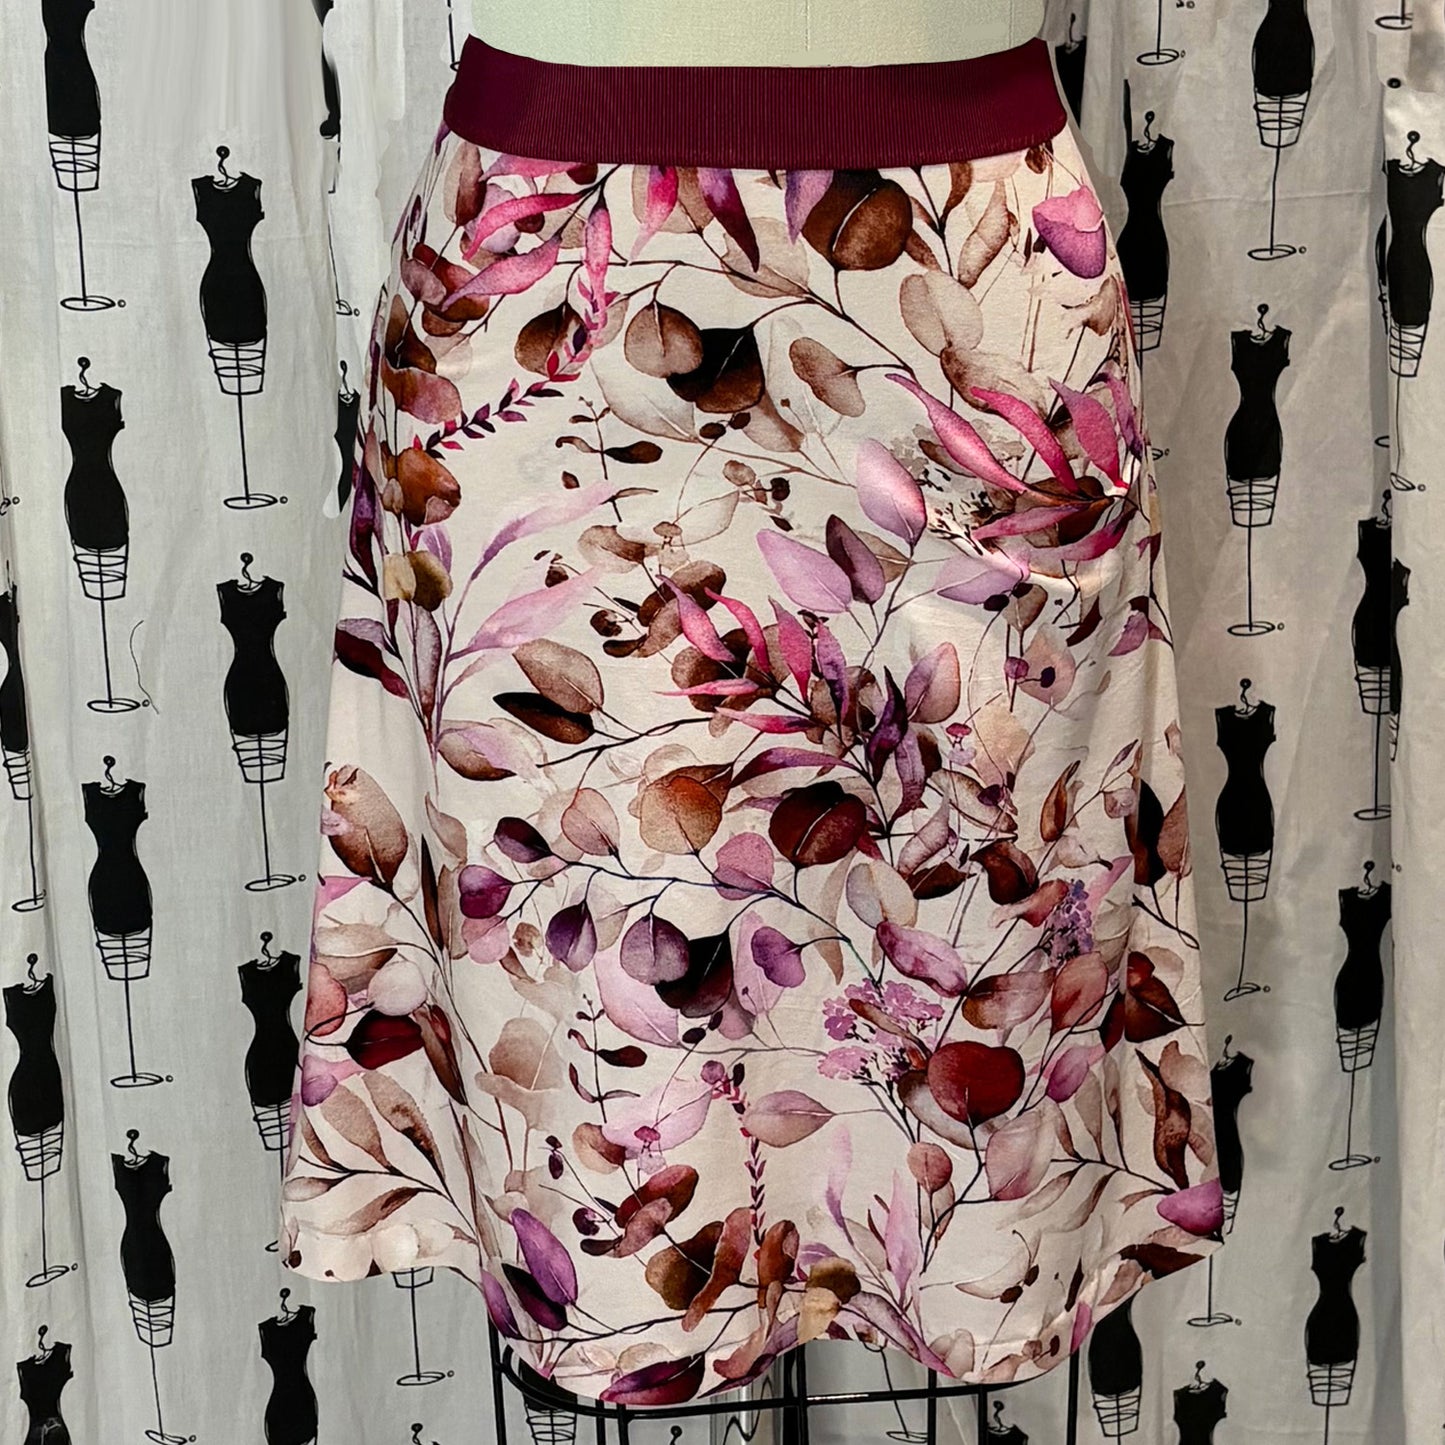 Sewing Kit -Kim Skirt Pattern + Fabric